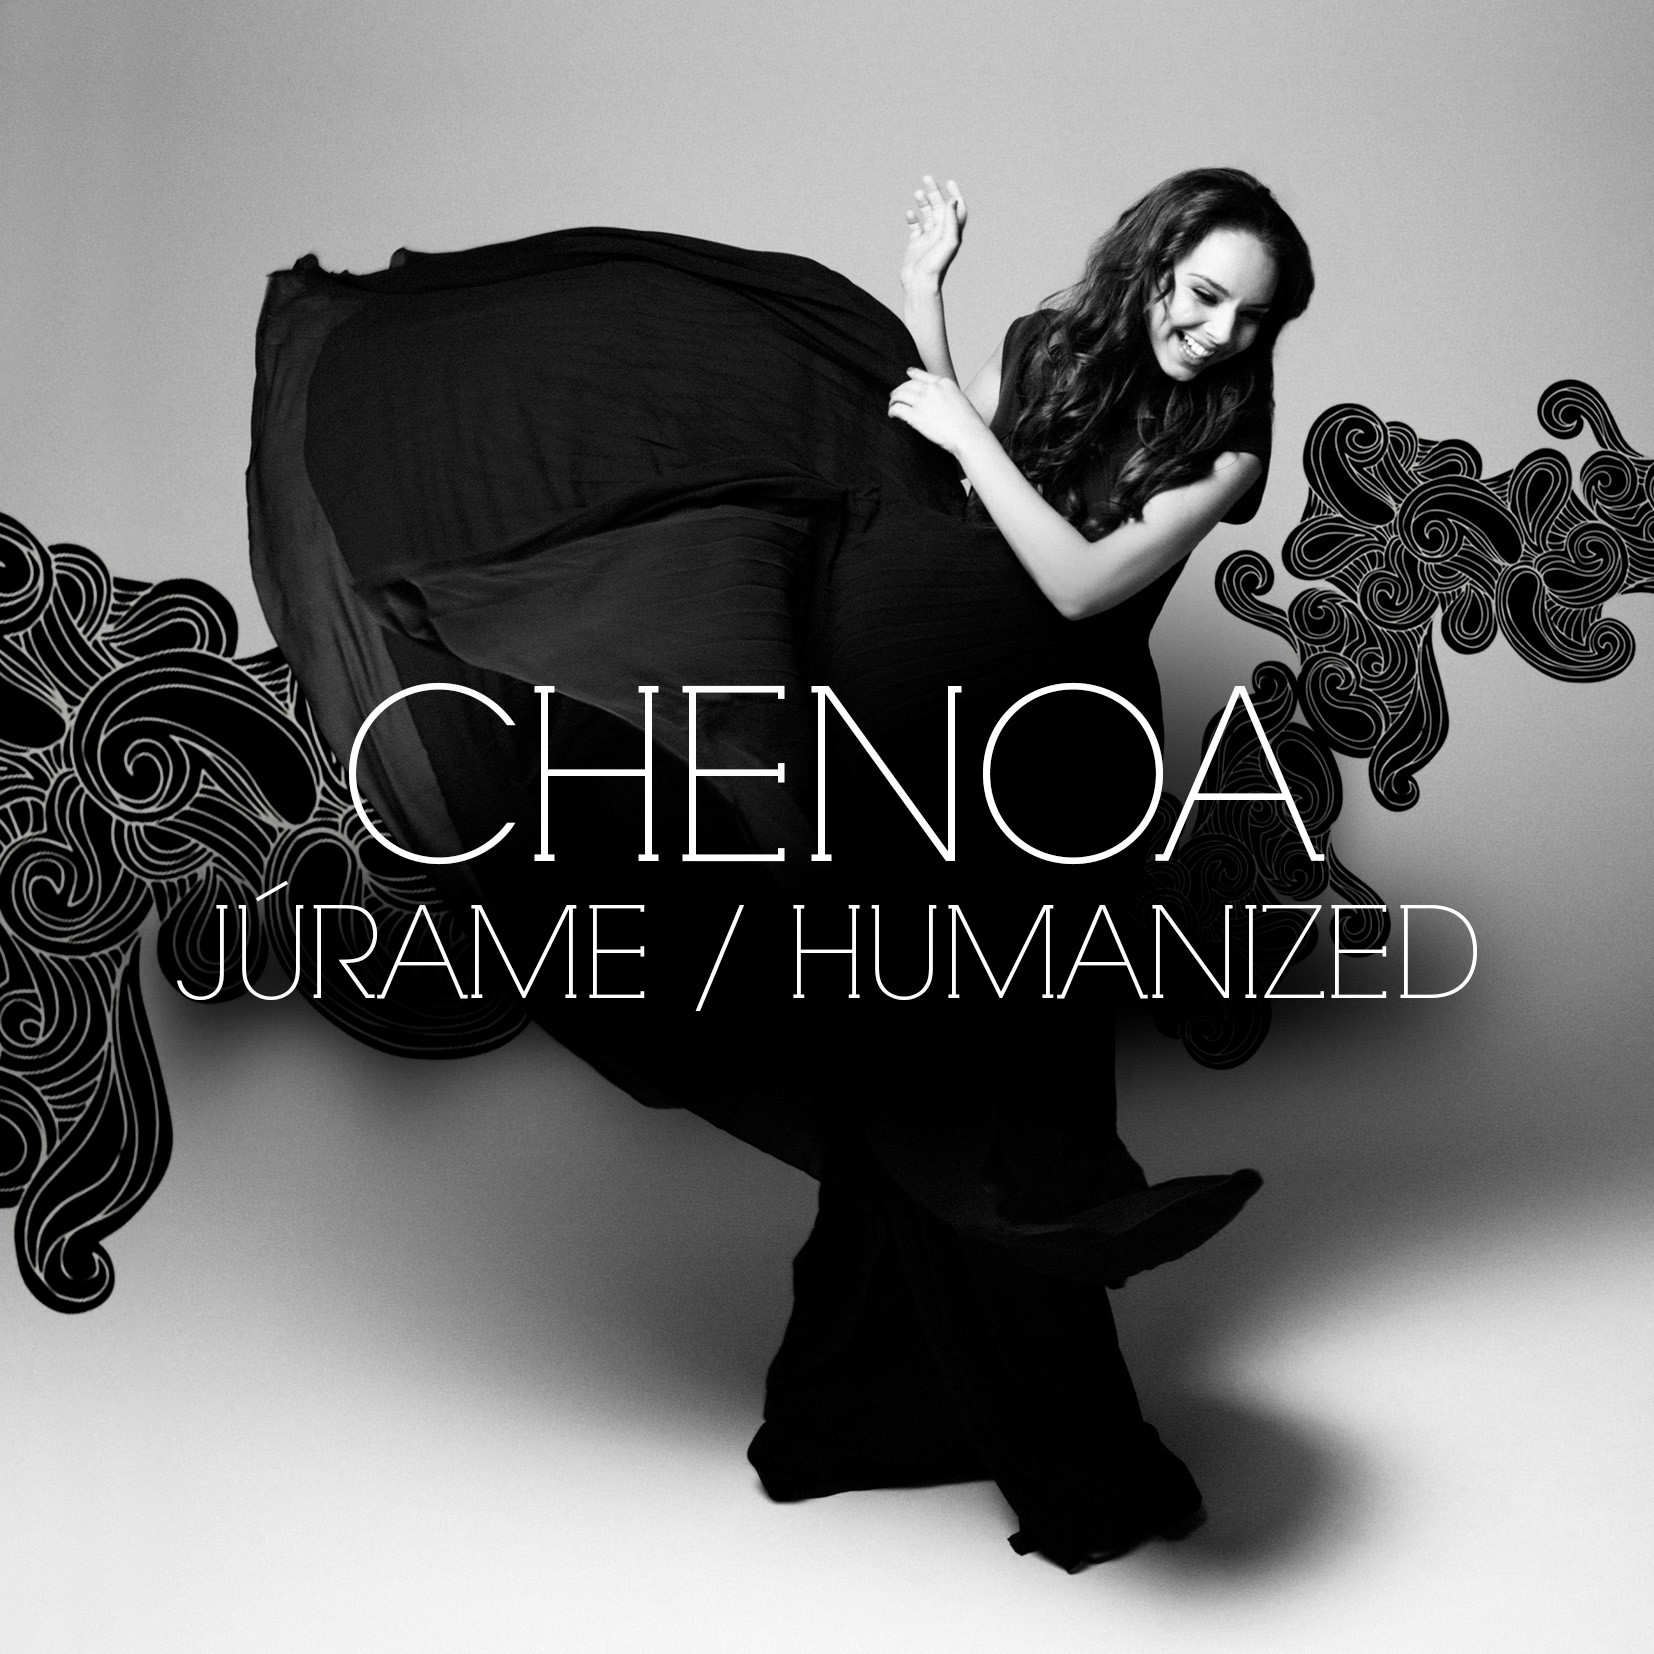 Júrame/Humanized nuevo single de Chenoa